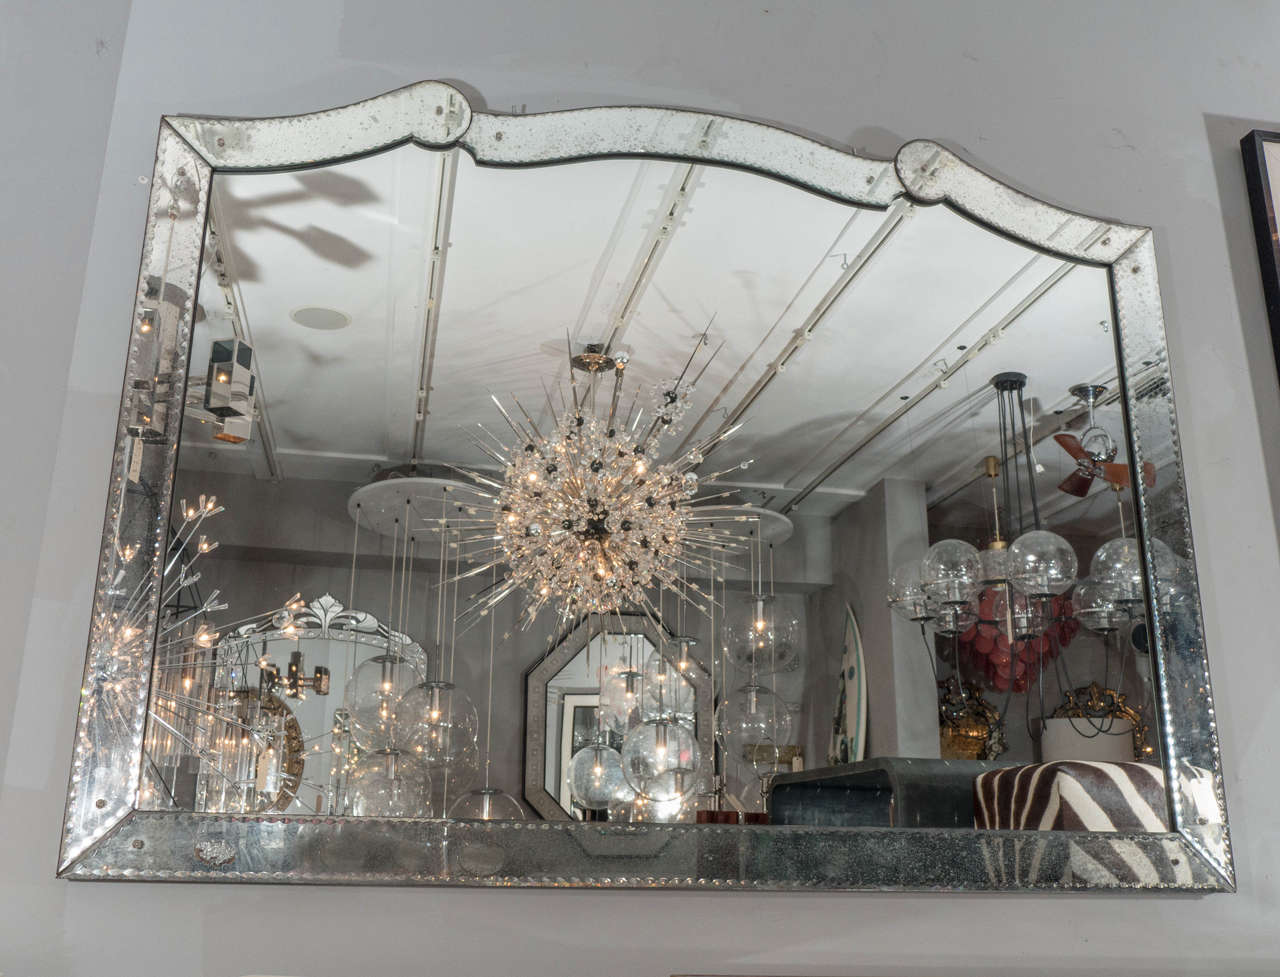 Beautiful Venetian style mirror with pie crust edging detail.